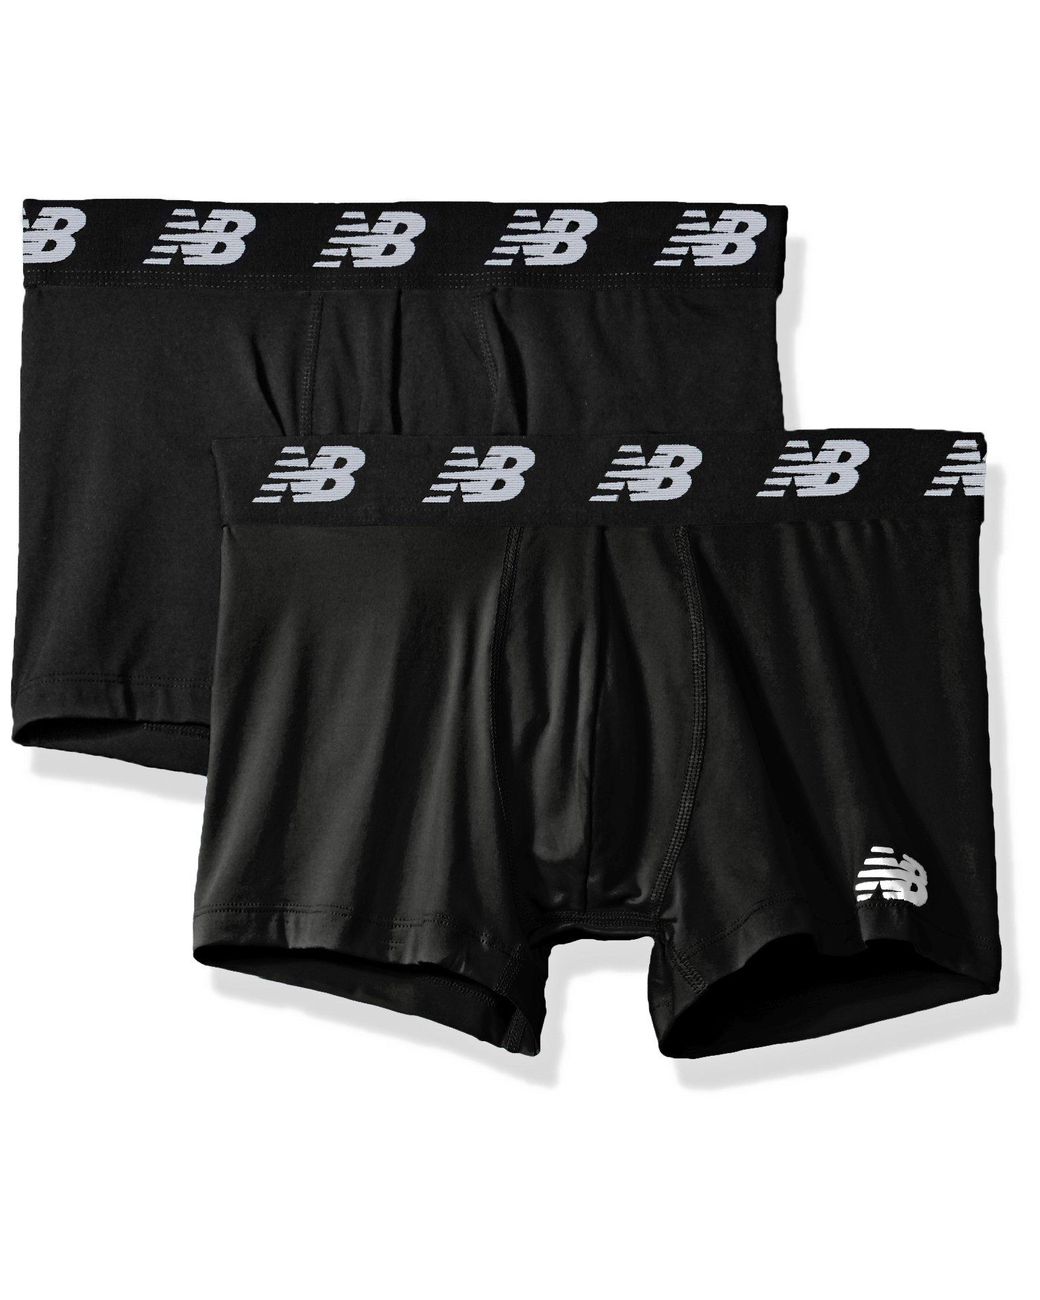 New Balance Premium Performance 3 Trunk Underwear in Black for